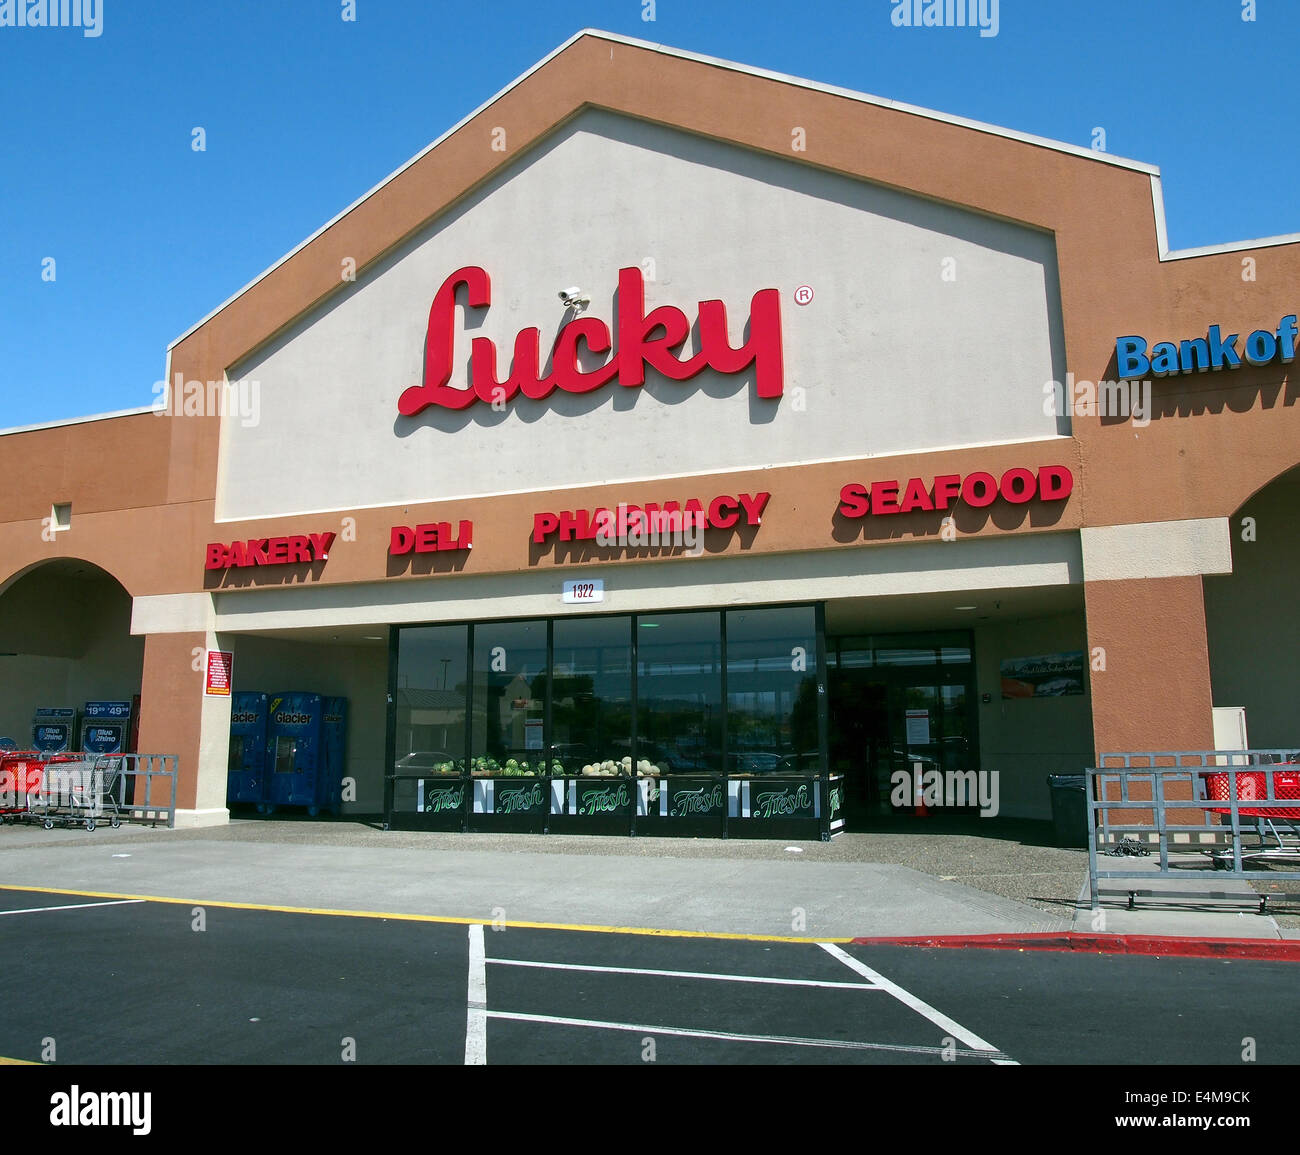 Lucky tienda de ultramarinos, California, EE.UU. Foto de stock